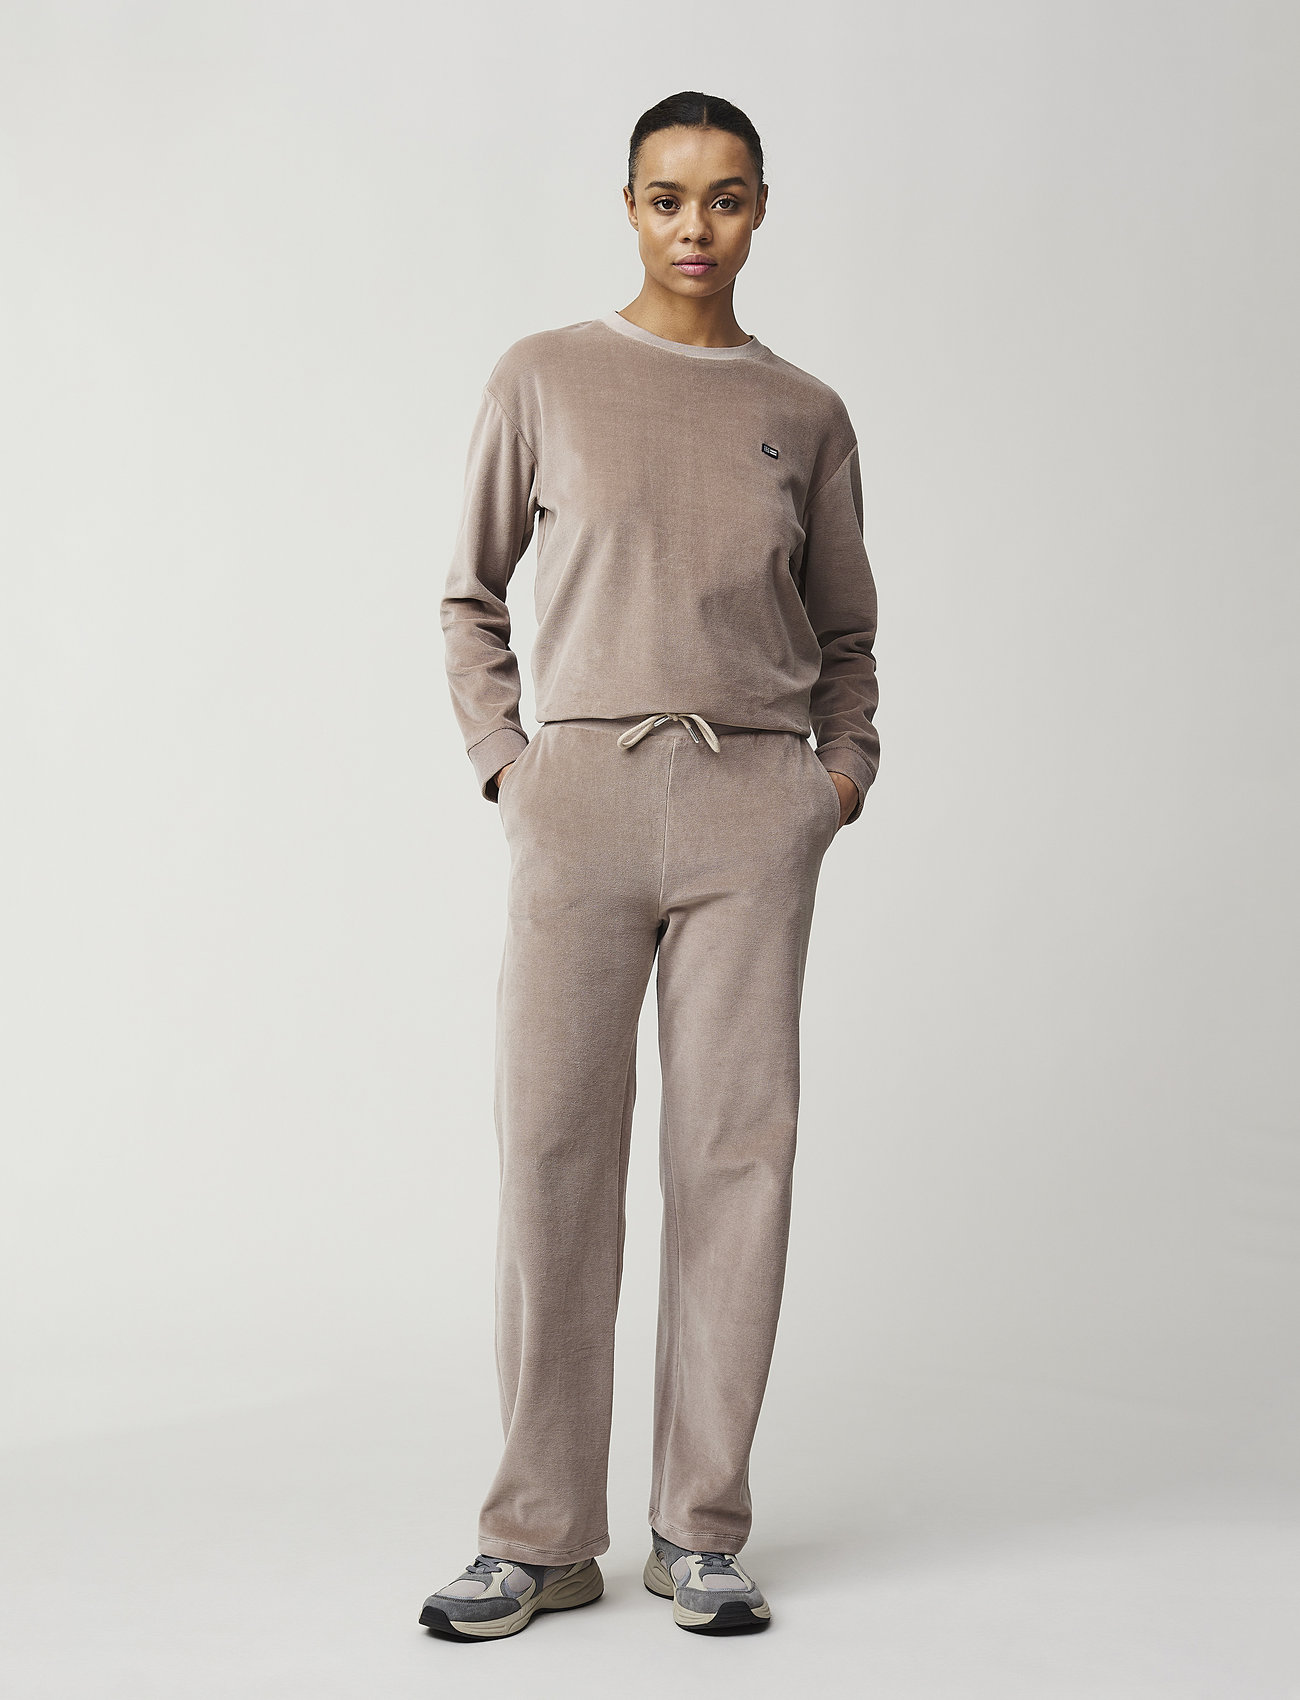 Lexington Clothing - Leona Organic Cotton Velour Pants - joggingbroeken - light brown - 1